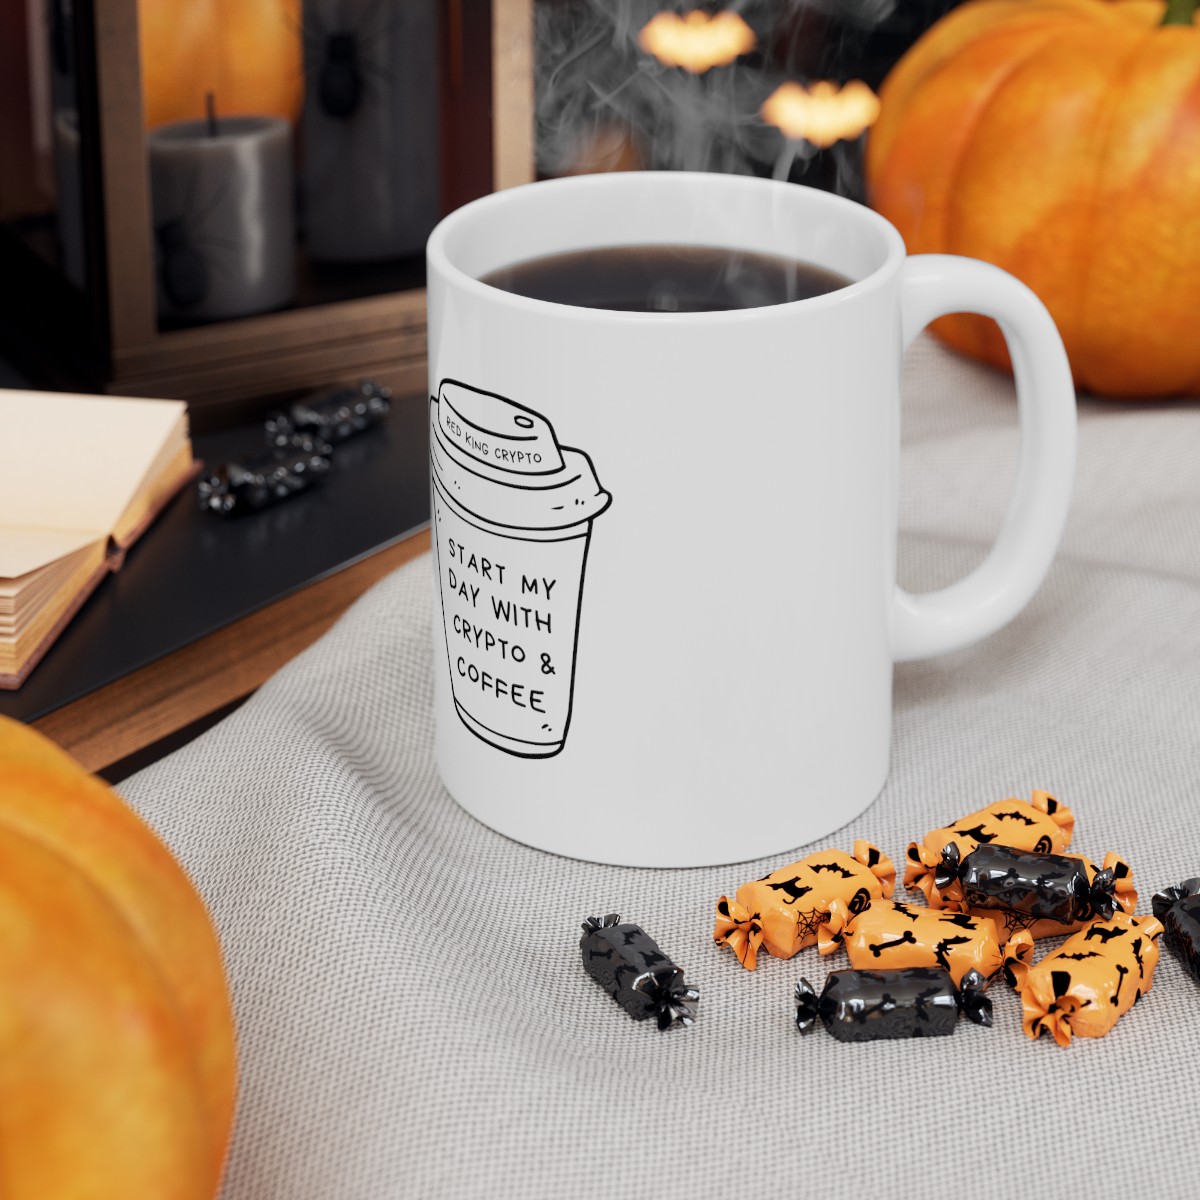 Start my Day with Crypto and Coffee - Ceramic Mug 11oz product main image